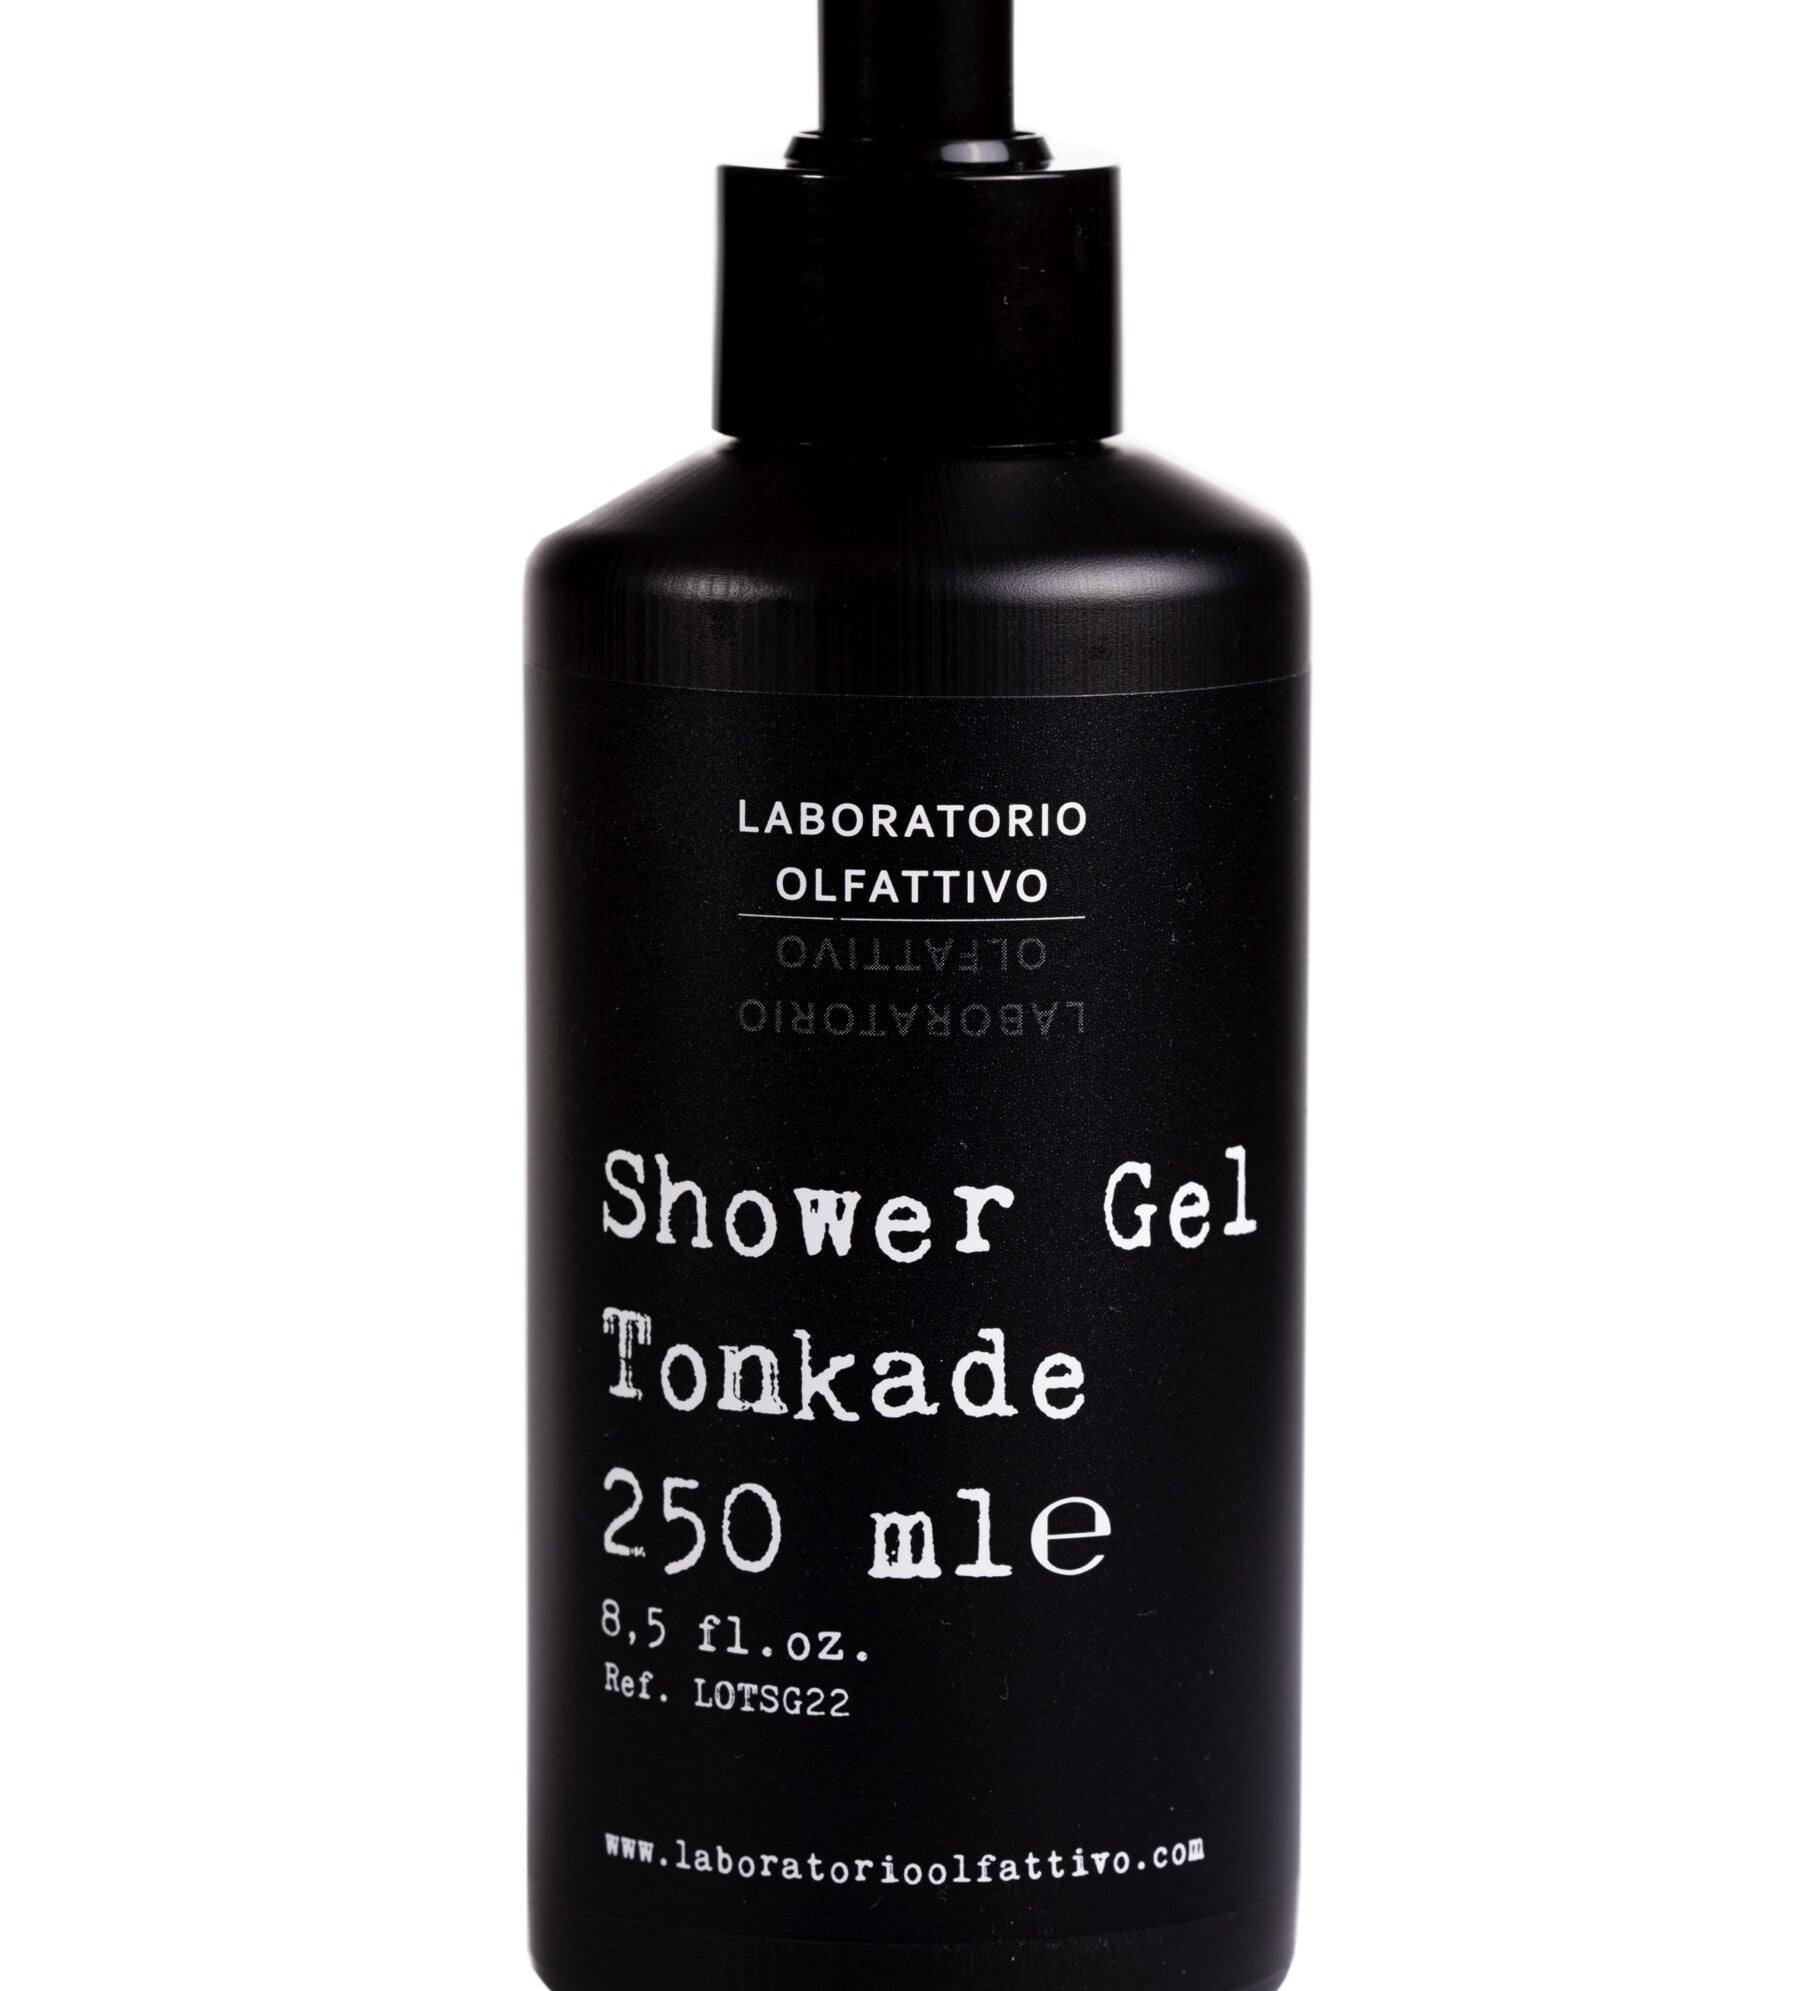 Shower-gel-Tonkade-scaled.jpg